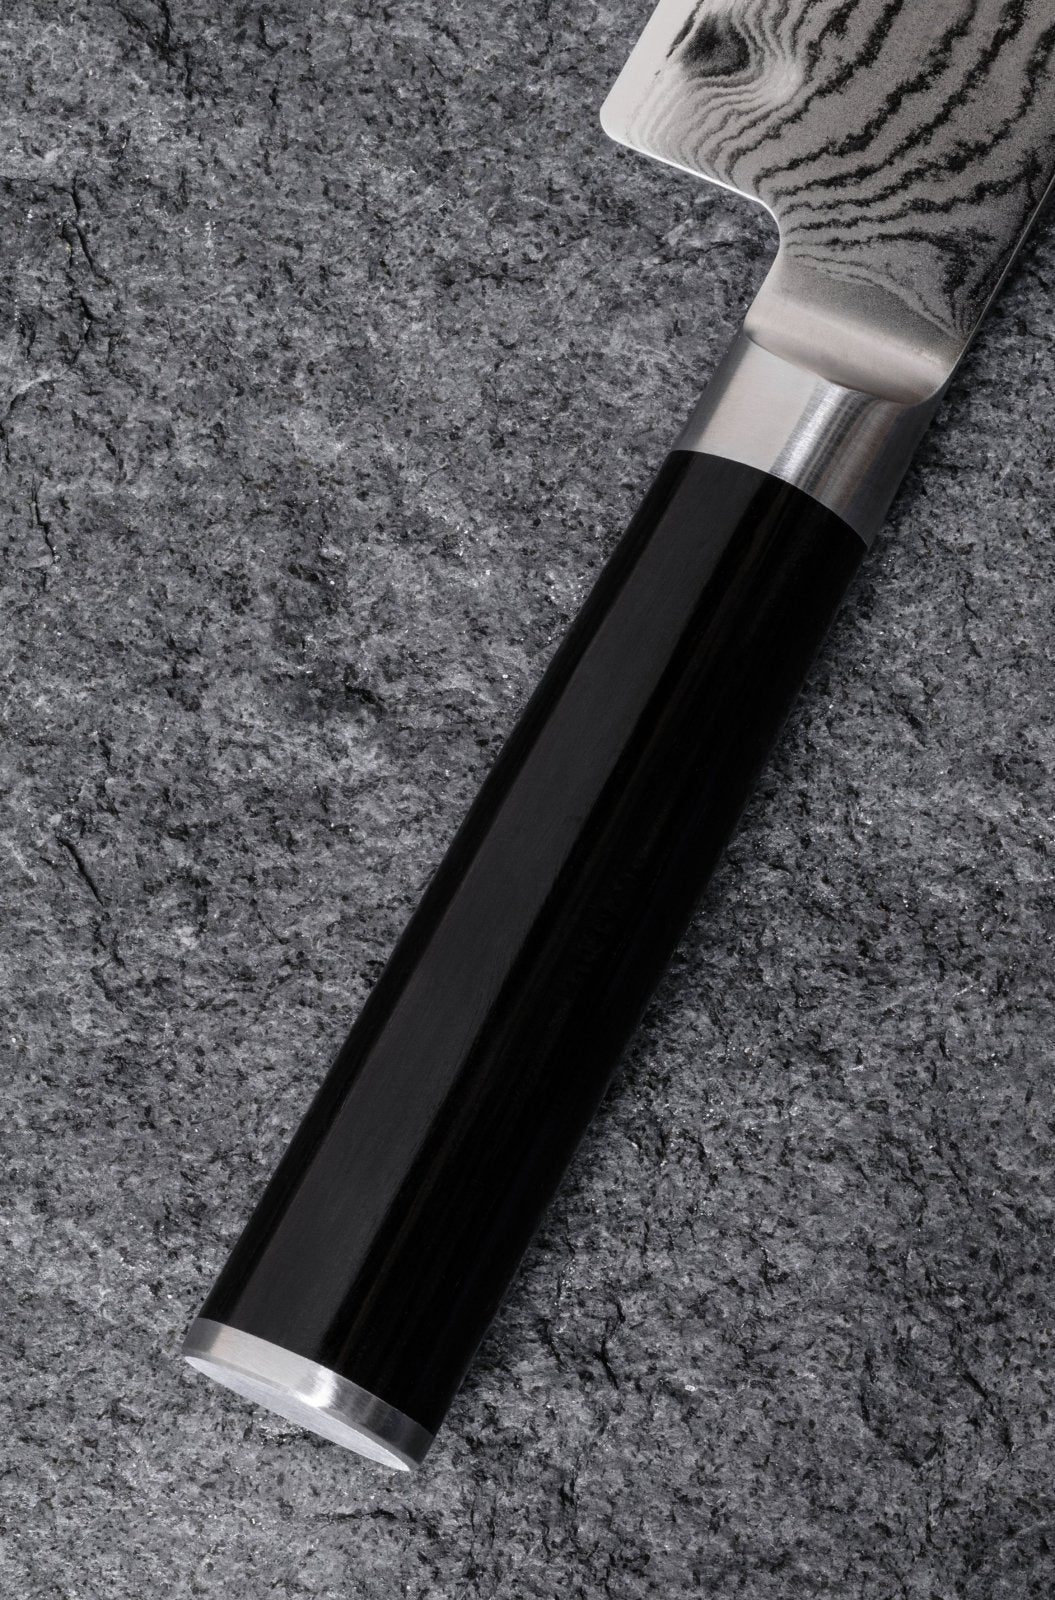 KAI Shun 23cm Scalloped Slicing Knife - KAI-DM-0720 - The Cotswold Knife Company